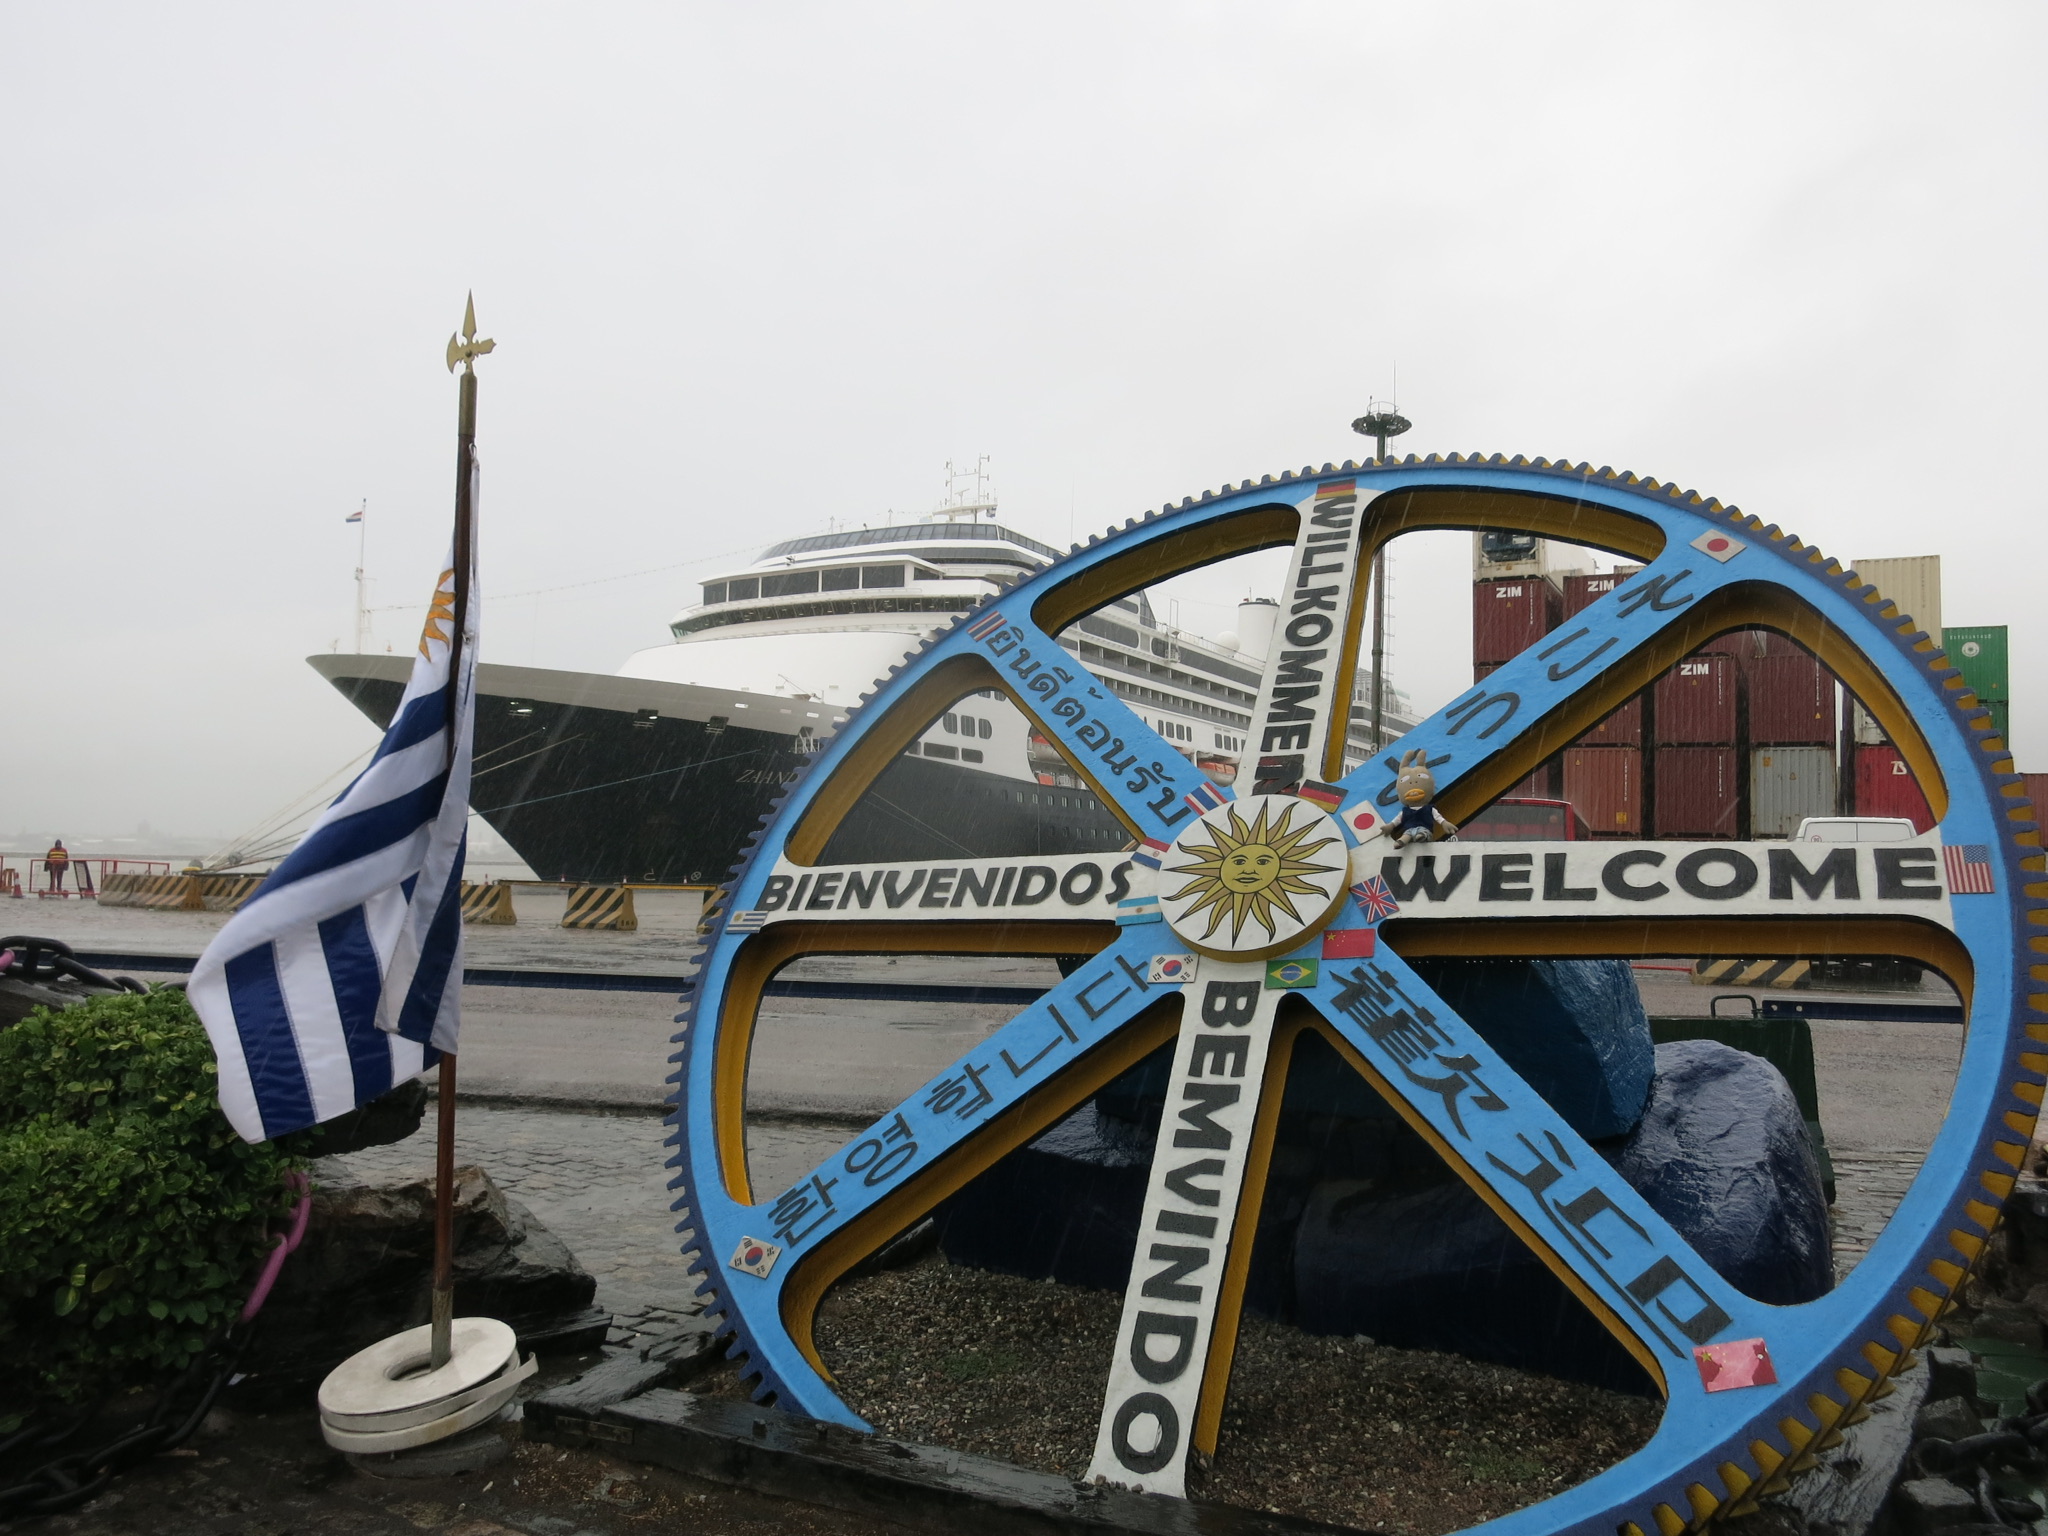 FotFot第一次到乌拉圭 Uruguay , 船停泊首都 Montevideo 的货运港，可惜天公